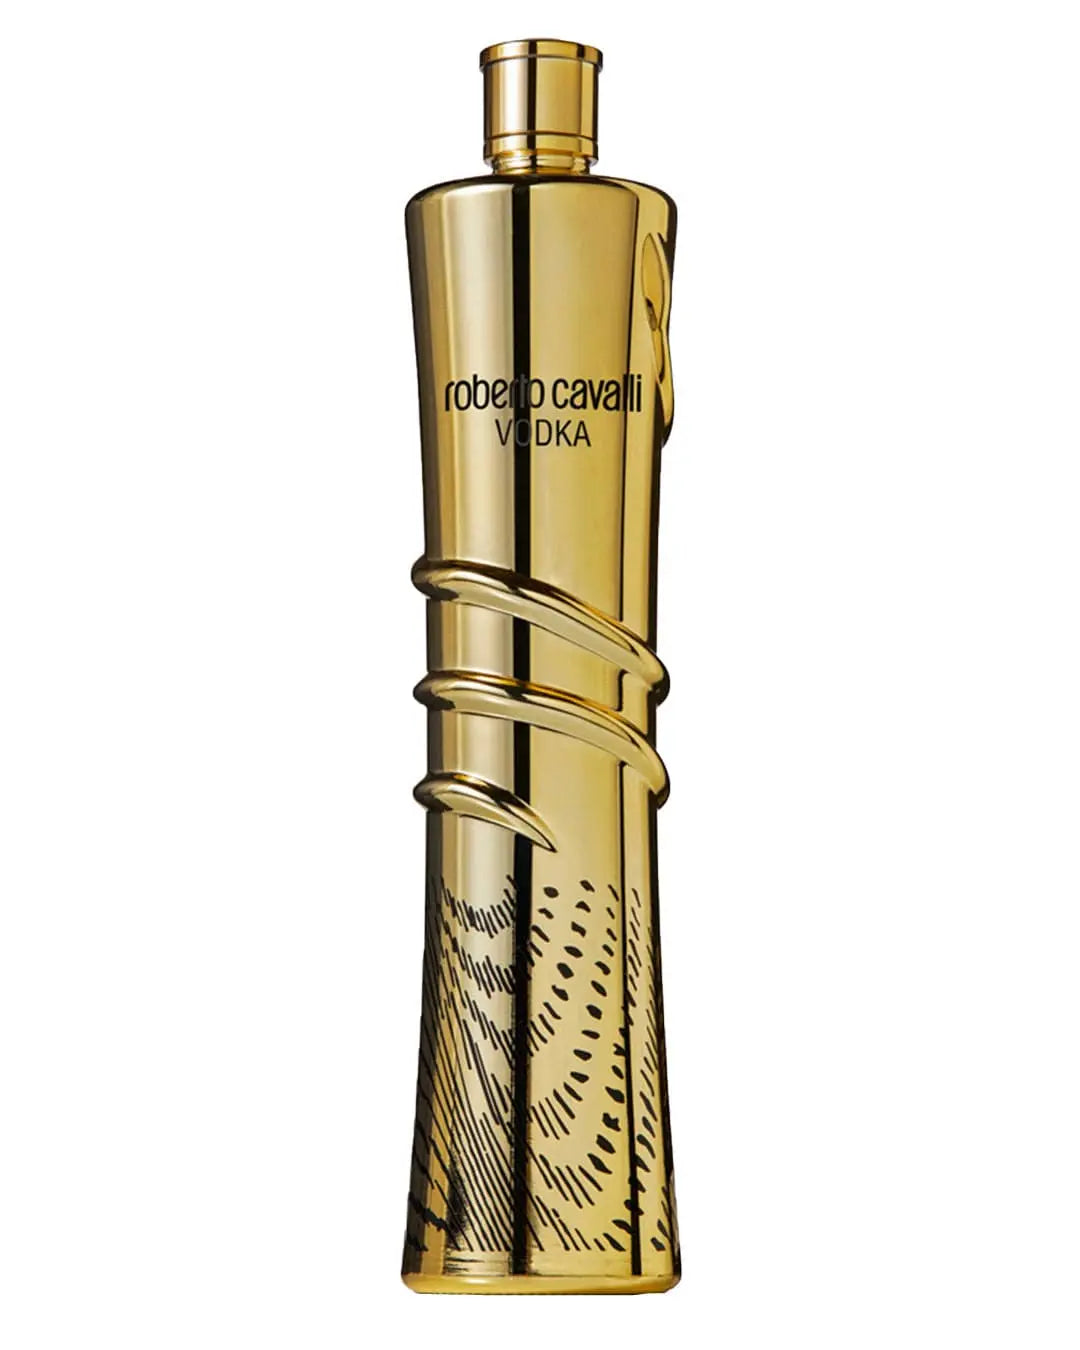 Roberto Cavalli Vodka Gold Limited Edition, 1 L – The Bottle Club